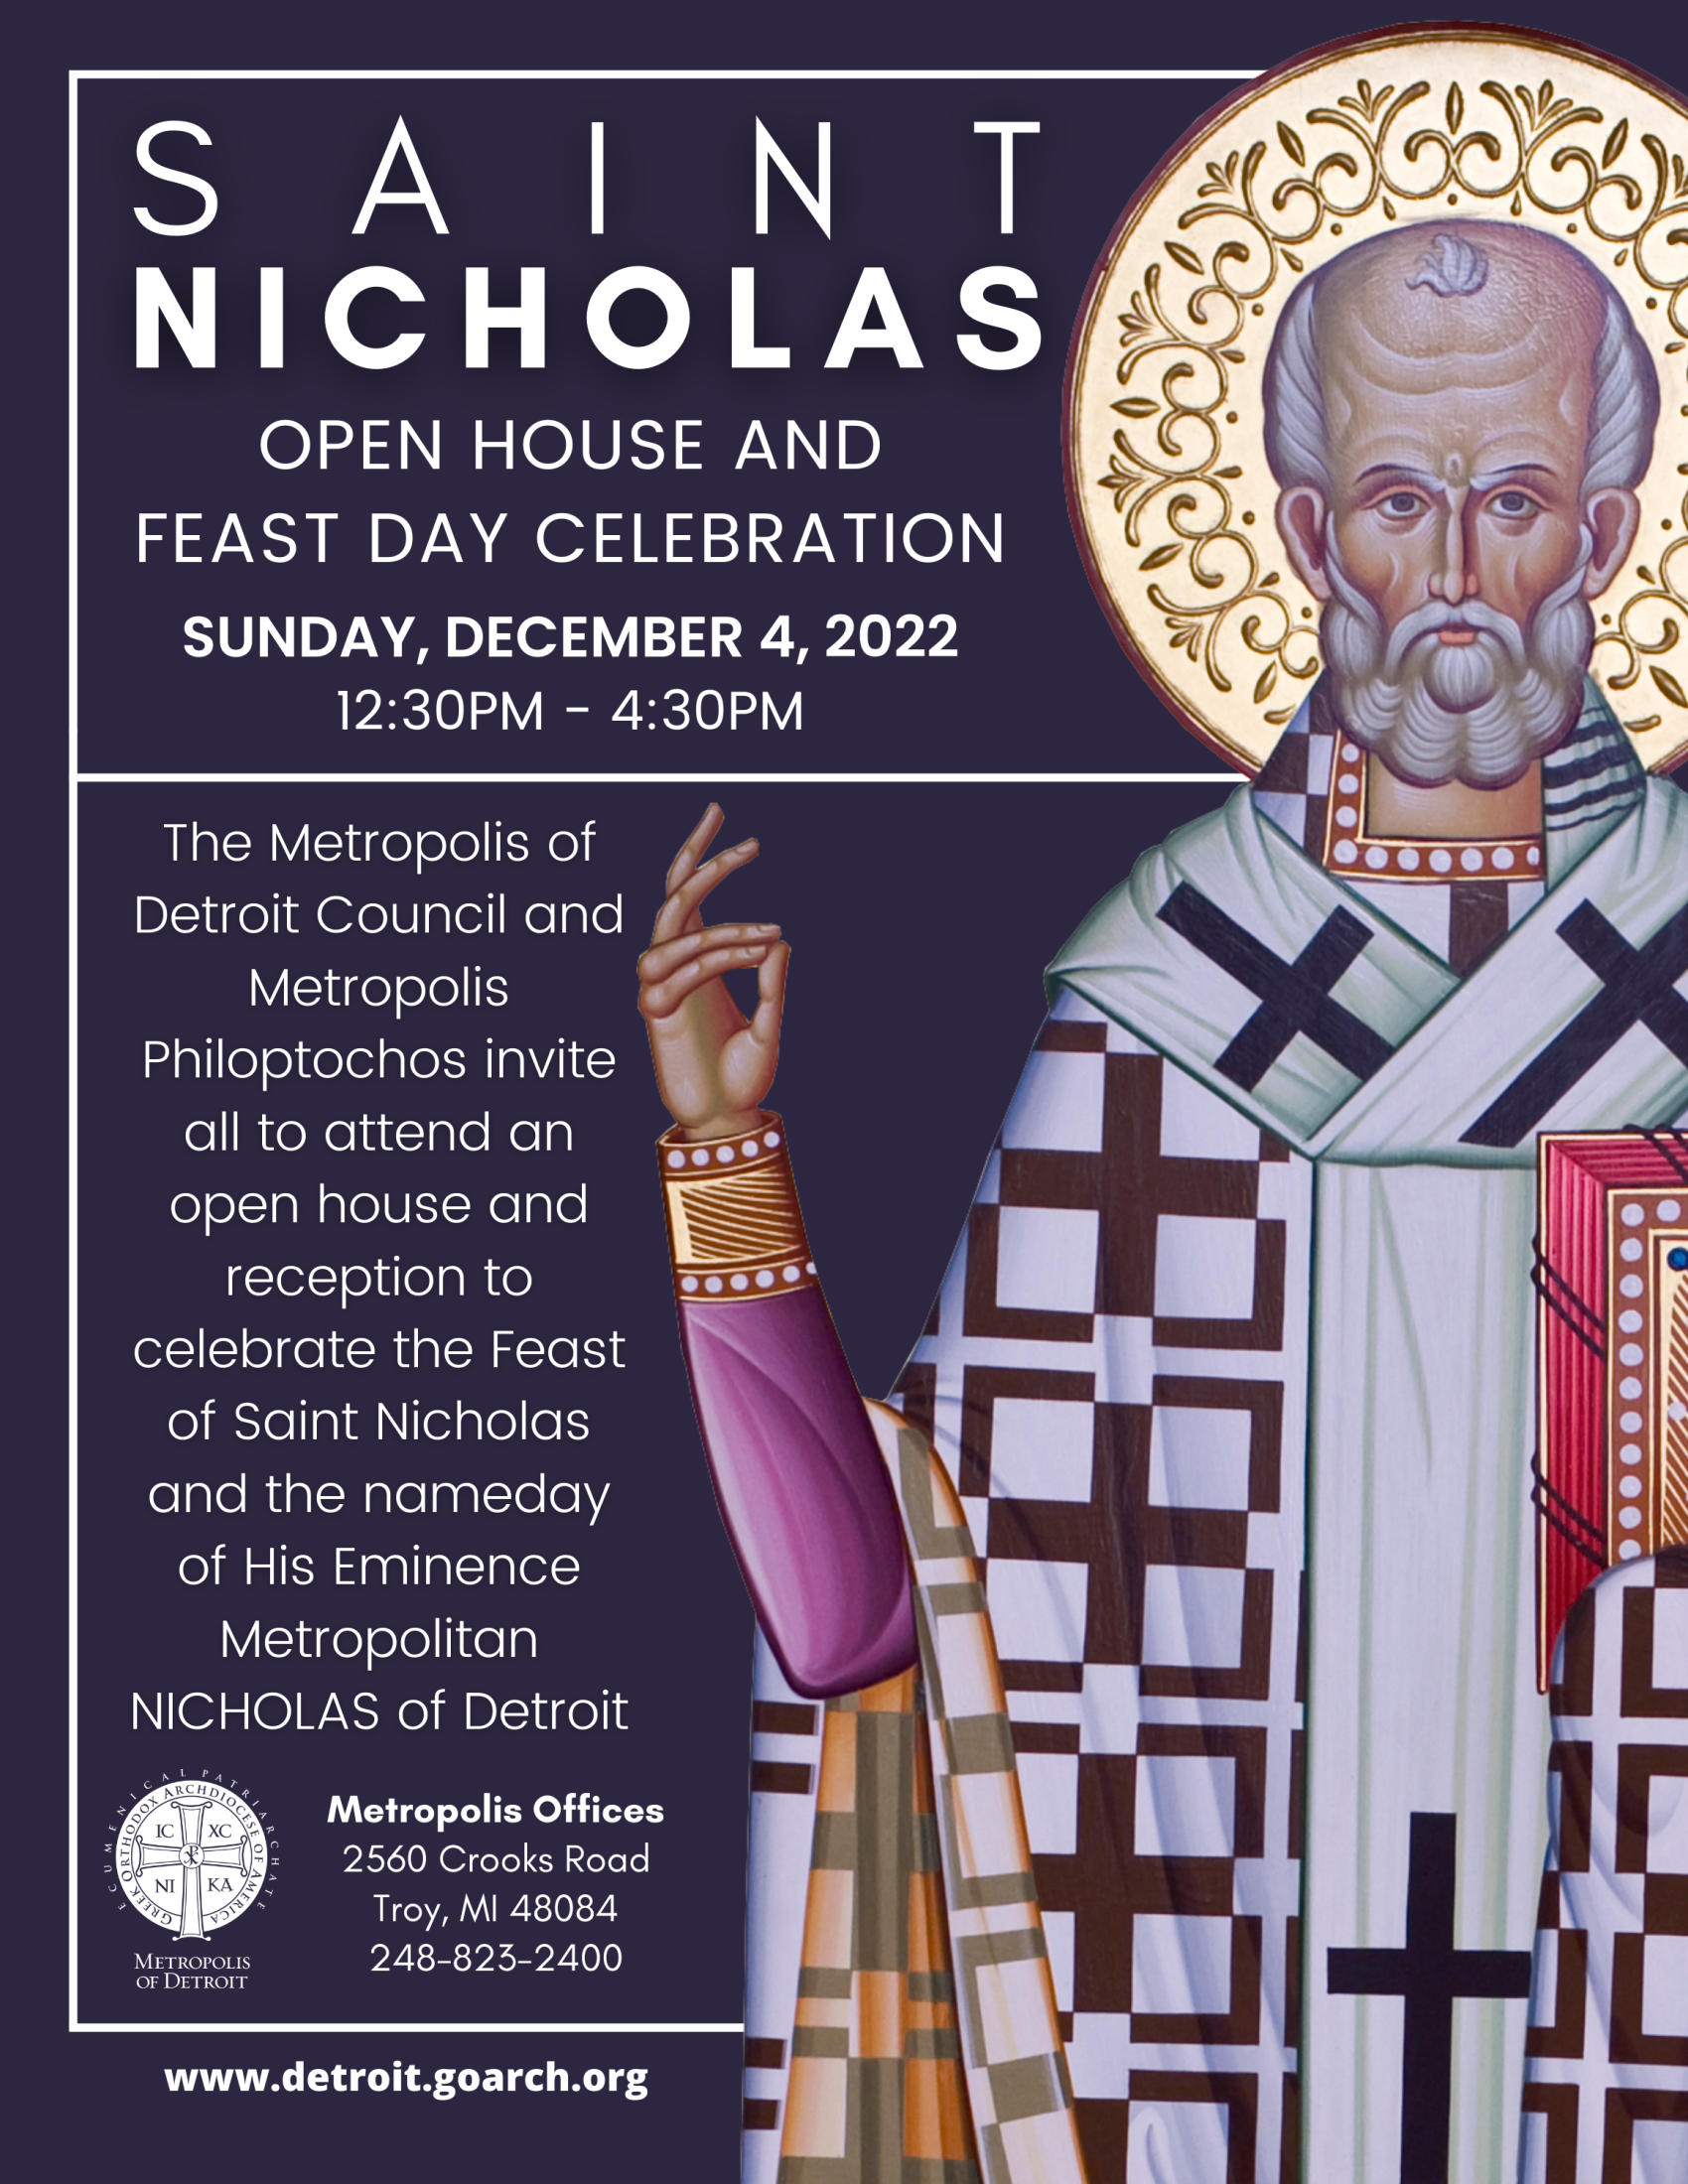 St. Nicholas Feast Day: Metropolis Offices